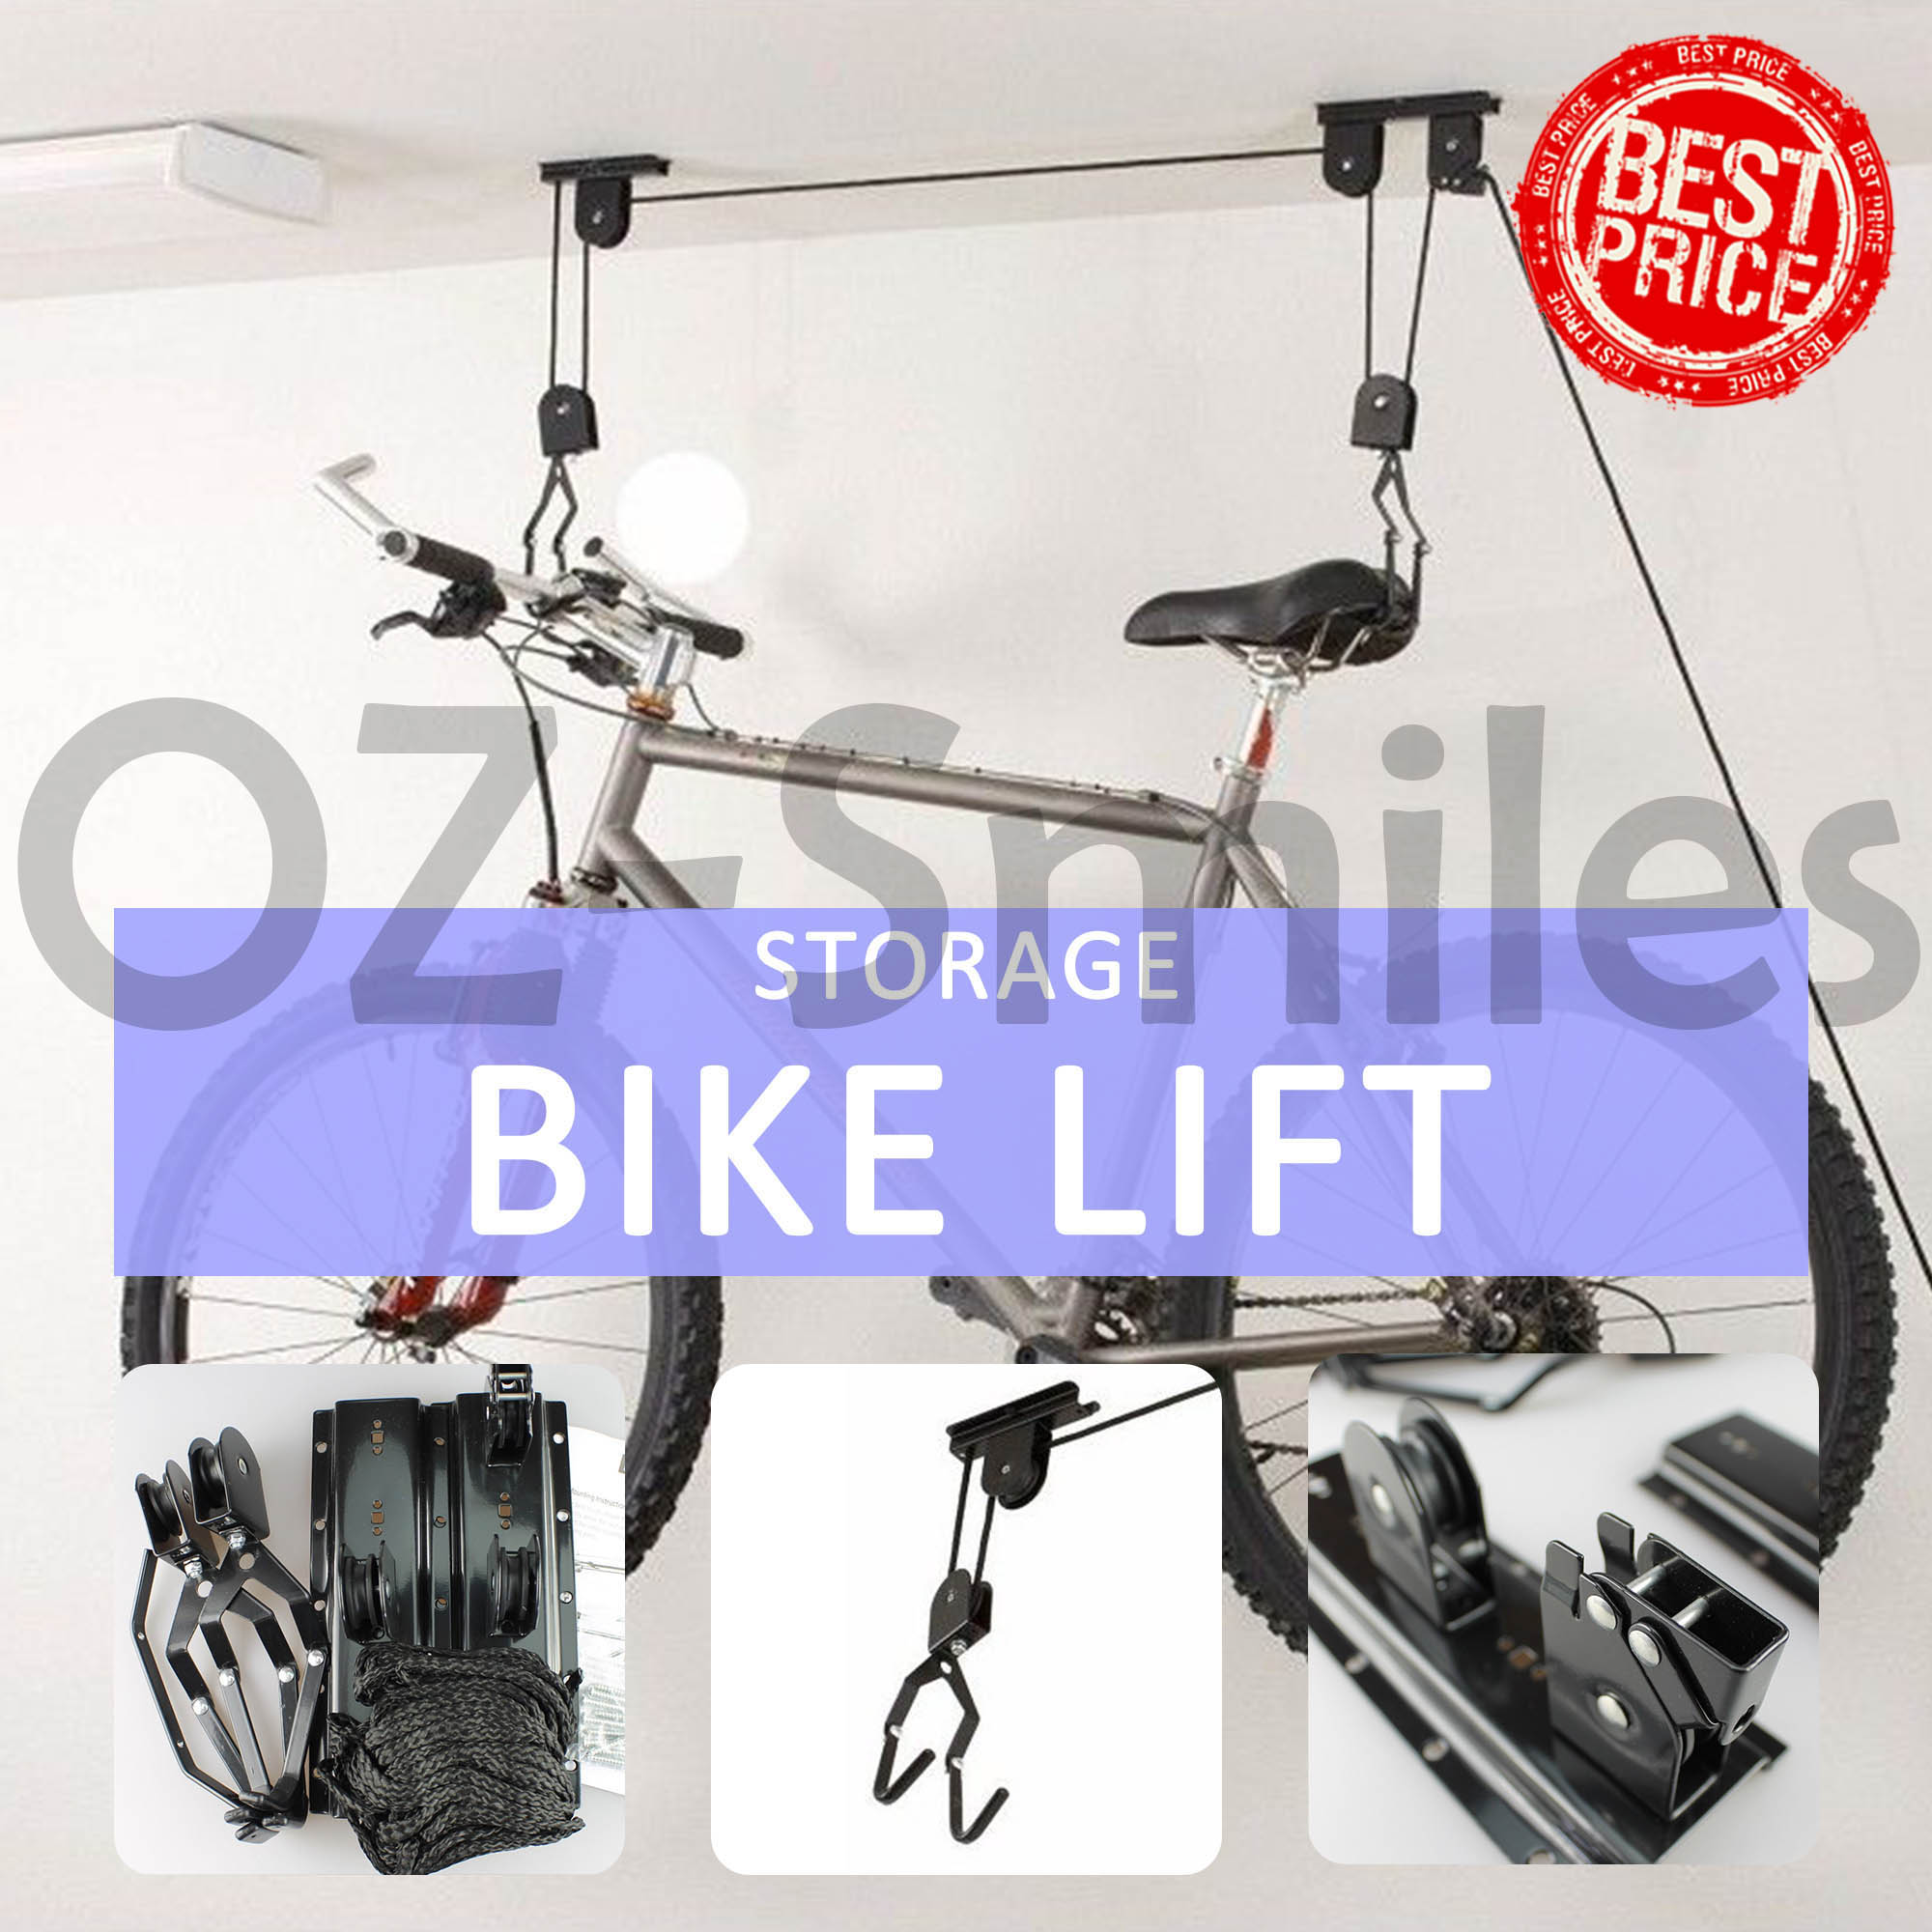 Bicycle Bike Rack Storage Hoist Surfboard Kayak Ladder Lift